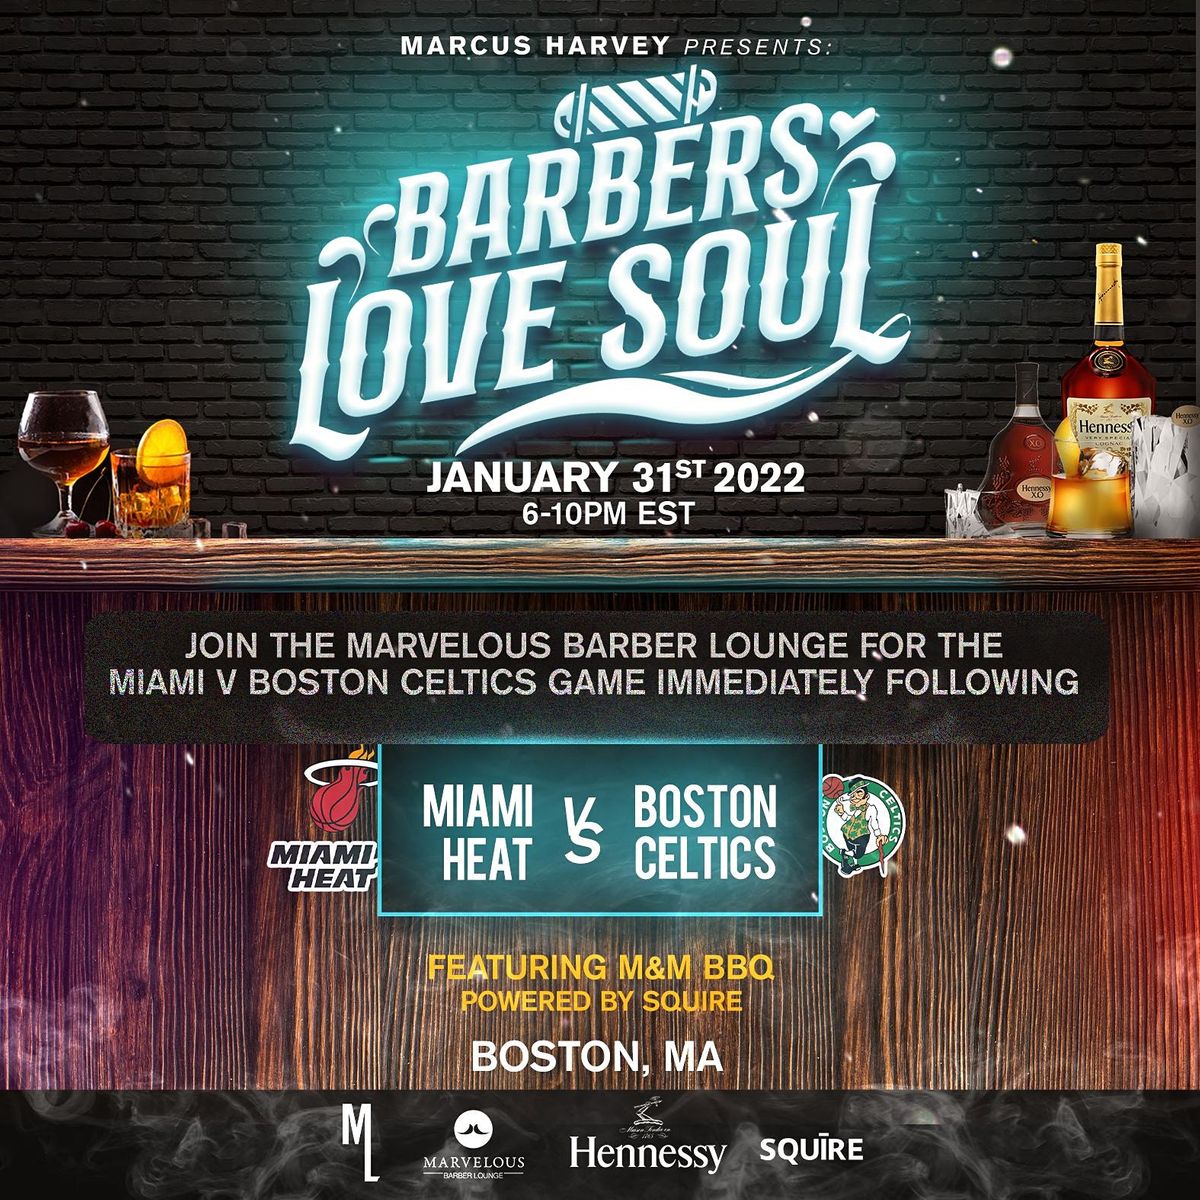 Marcus Harvey Presents: "Barbers Love Soul"